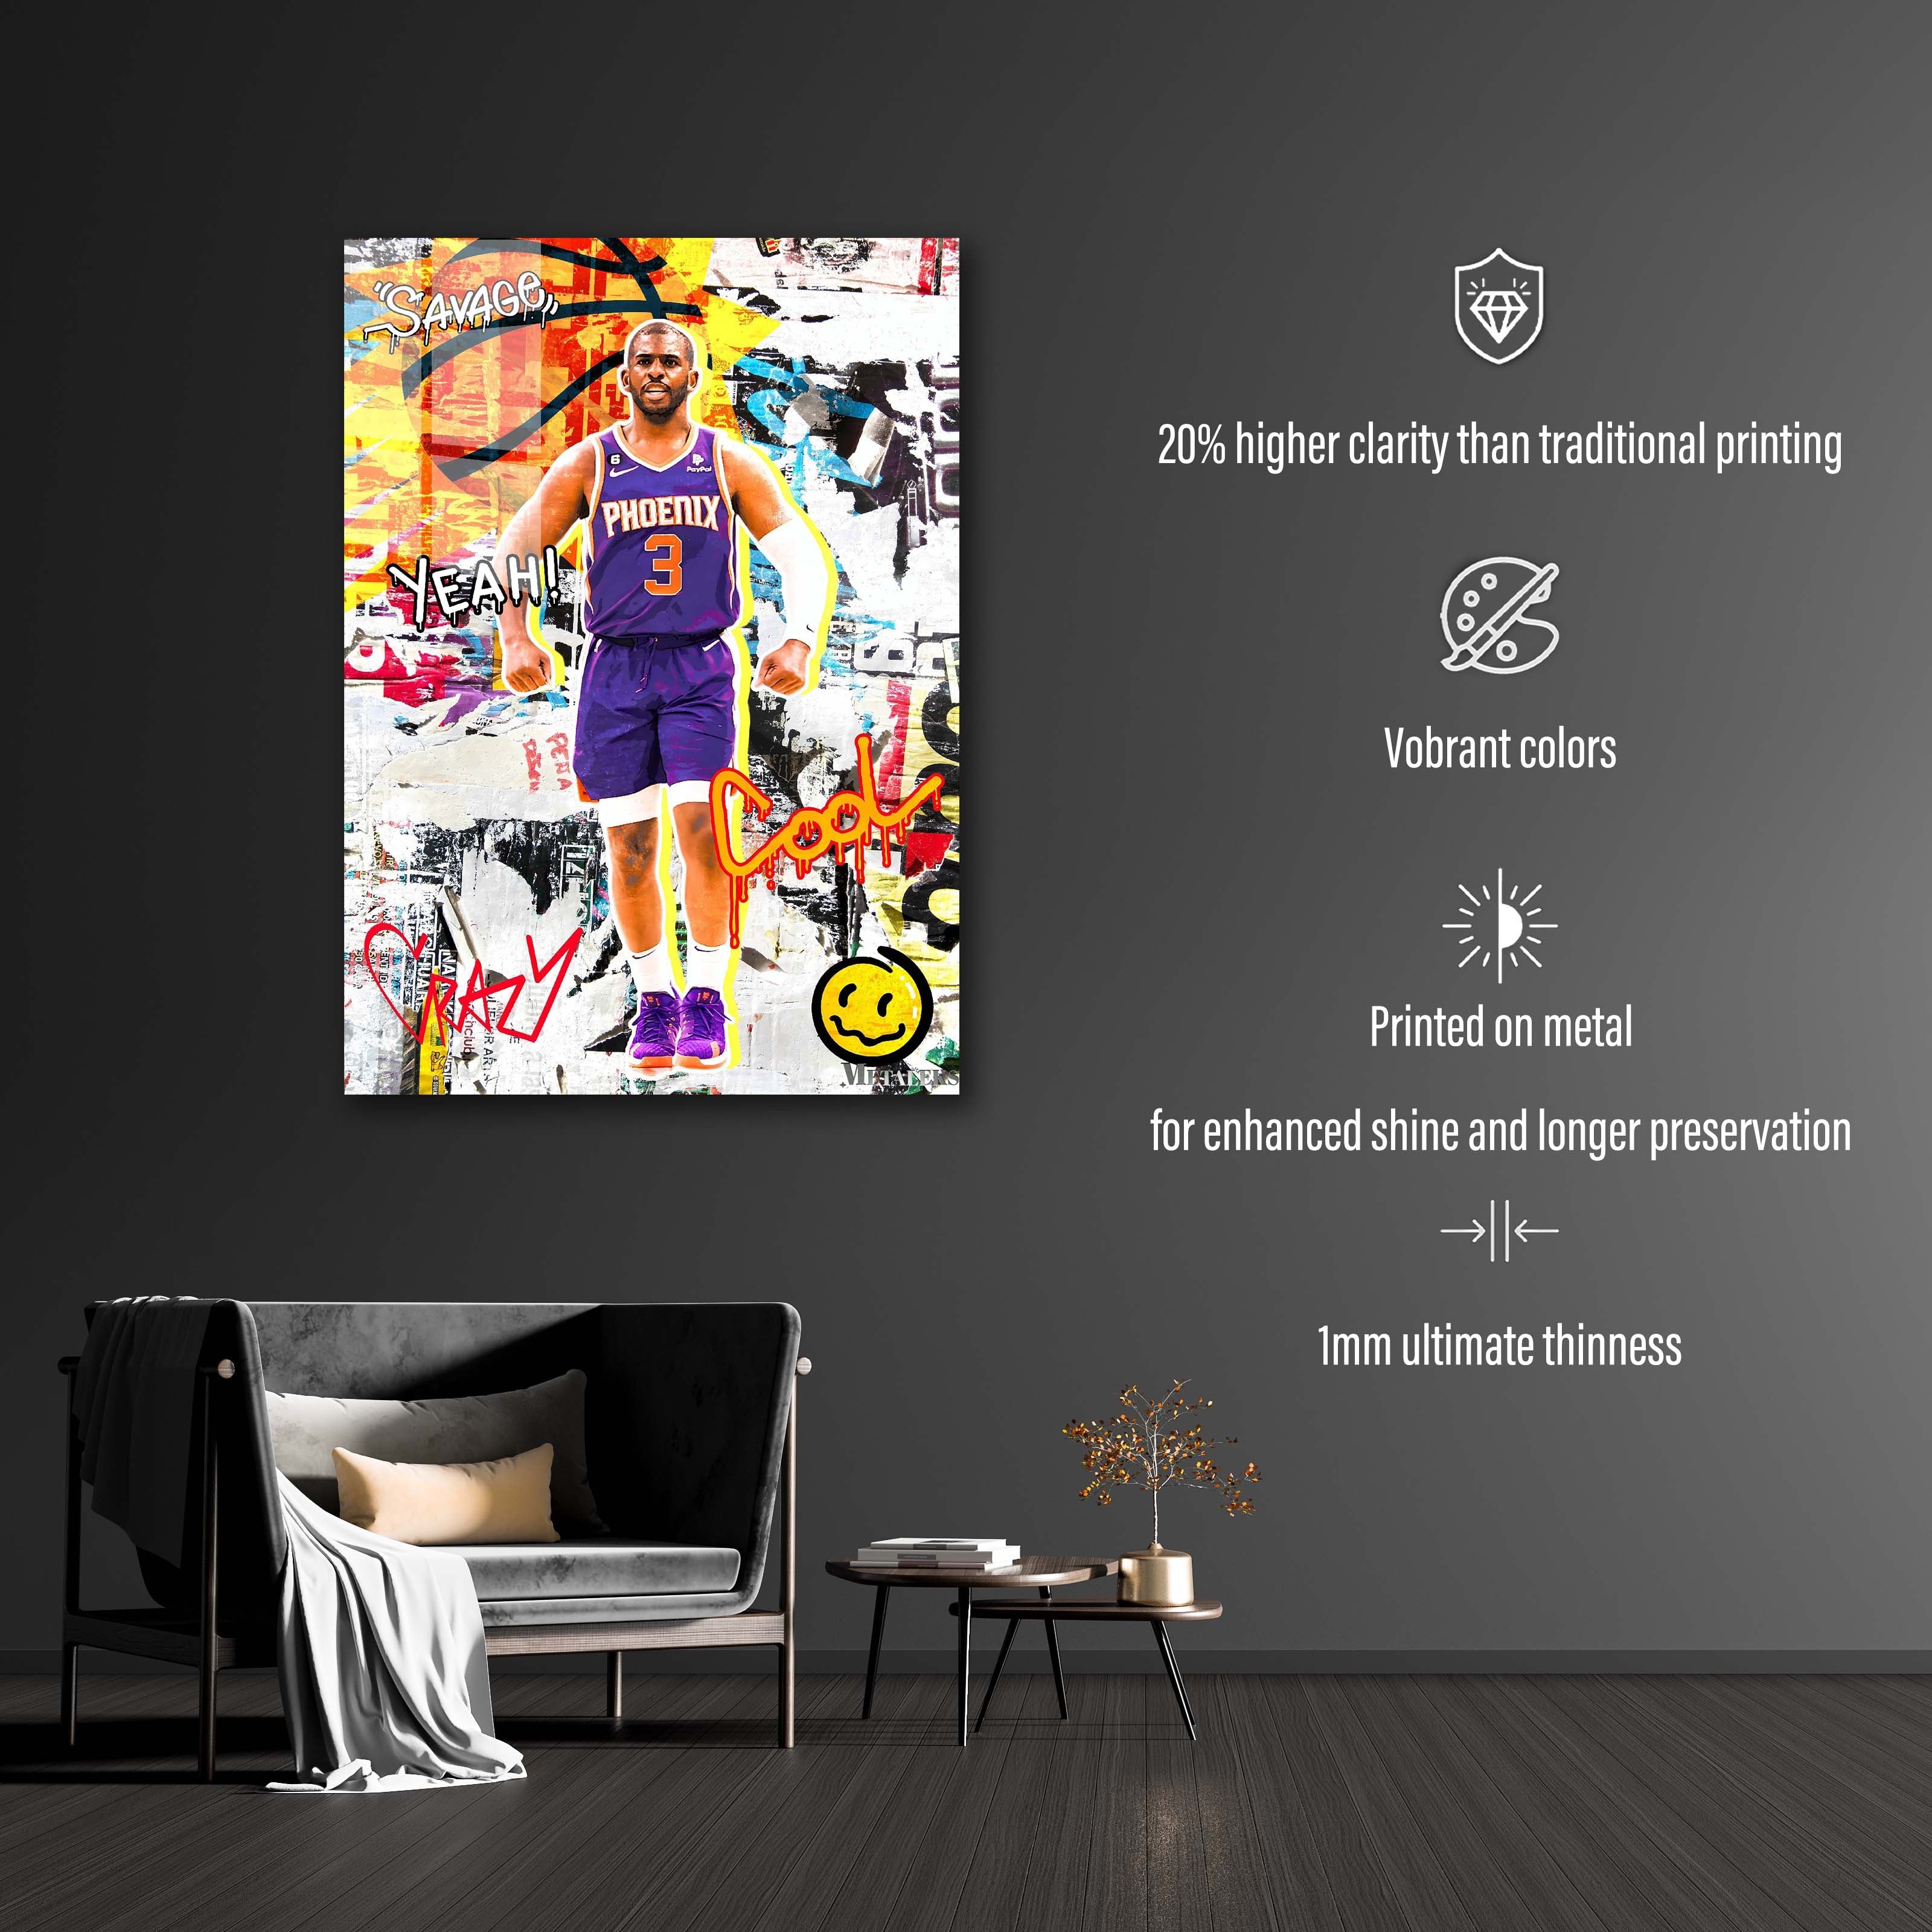 Chris Paul Phoenix Suns ,-designed by @Hoang Van Thuan